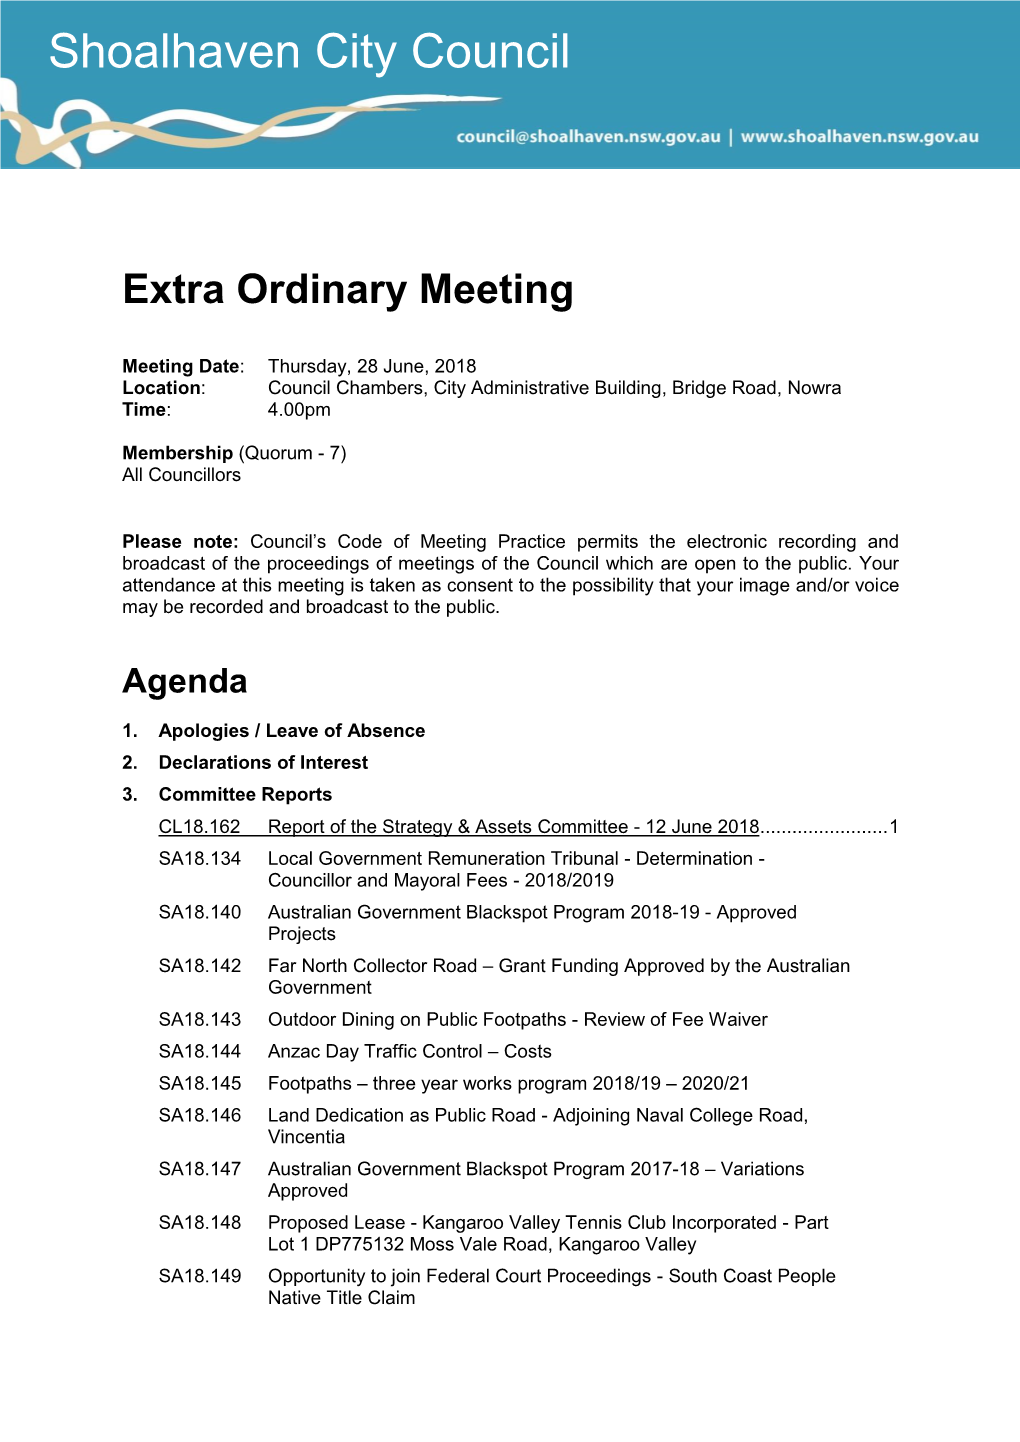 Agenda of Extra Ordinary Meeting